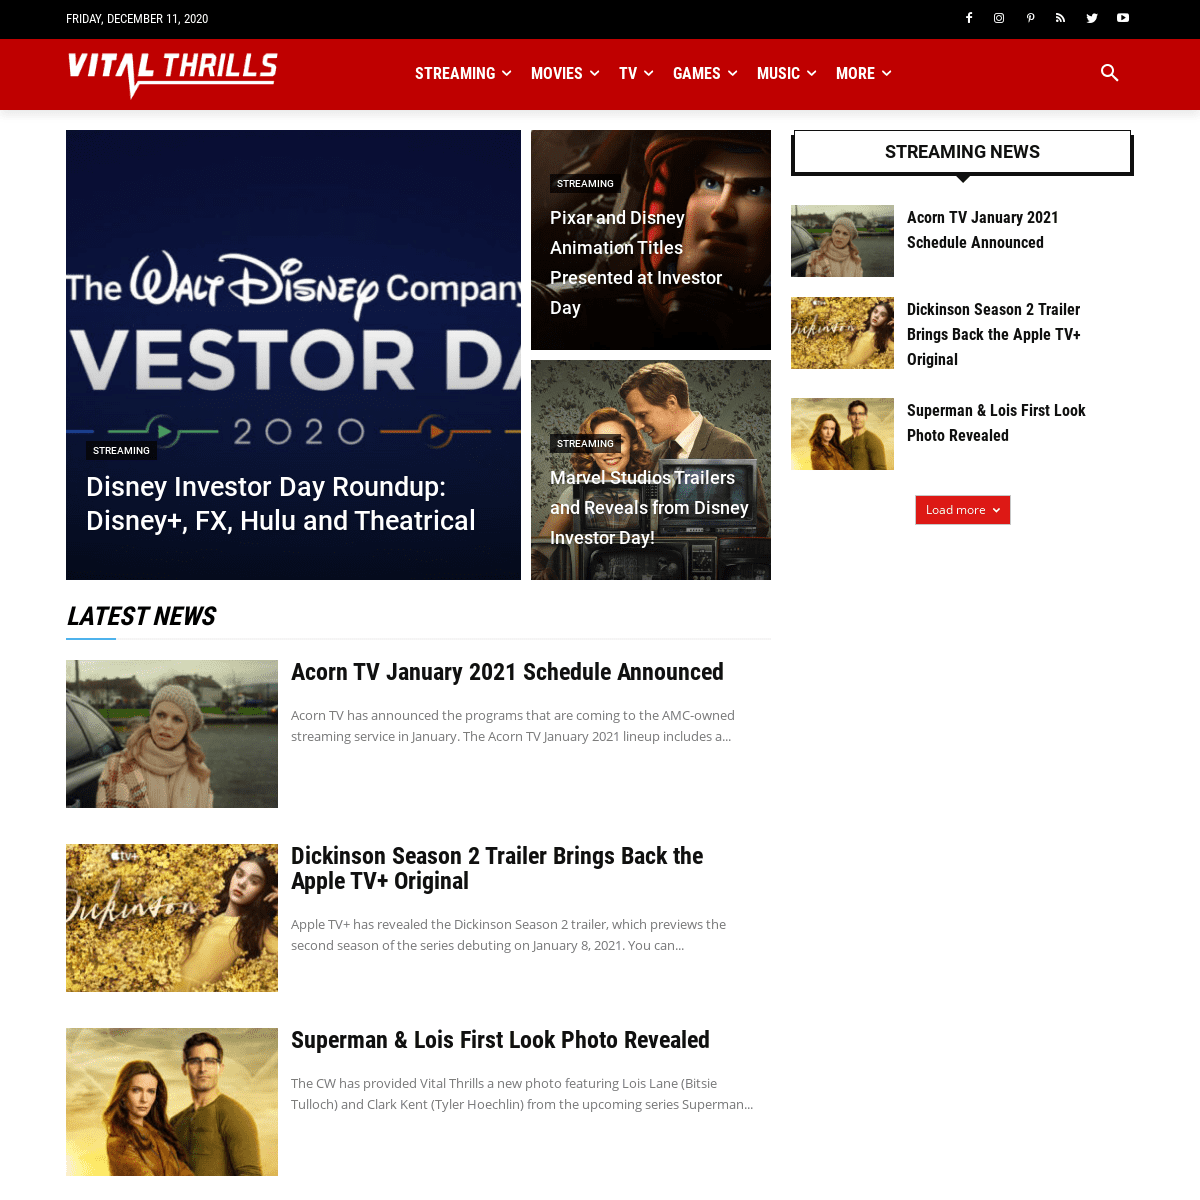 A complete backup of vitalthrills.com